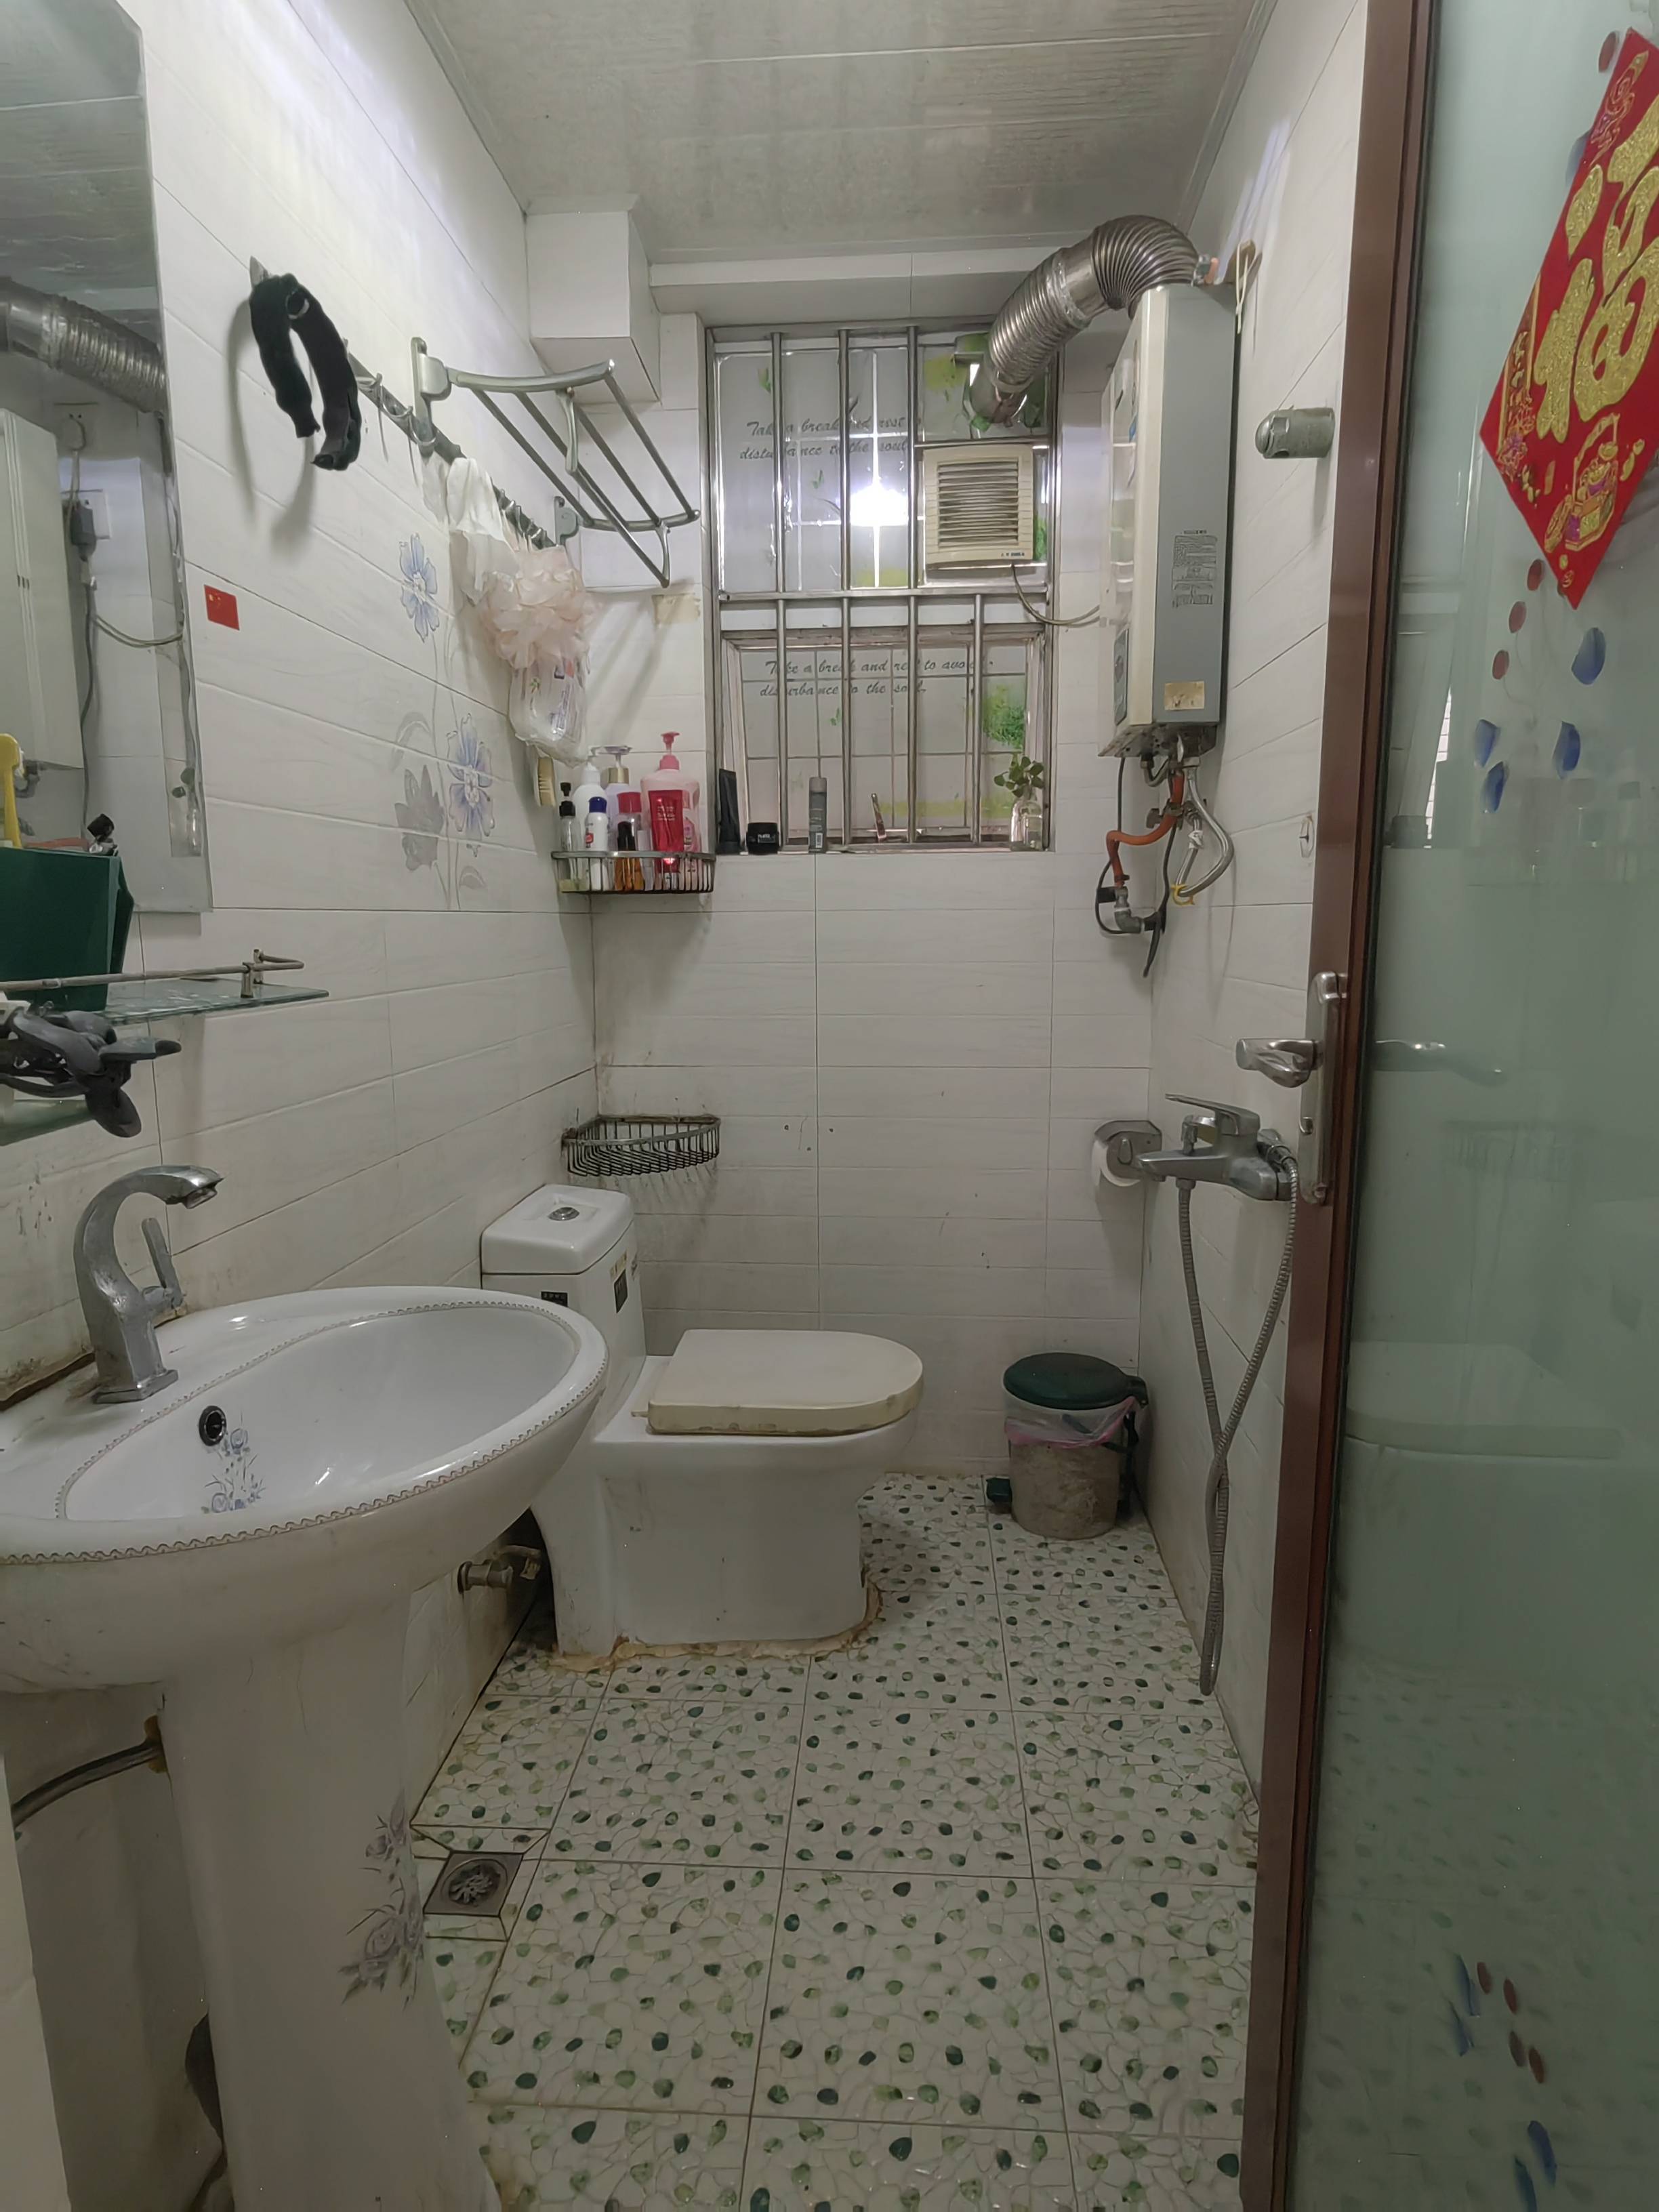 Shenzhen-Longgang-Cozy Home,Clean&Comfy,No Gender Limit,Hustle & Bustle,Chilled,LGBTQ Friendly,Pet Friendly